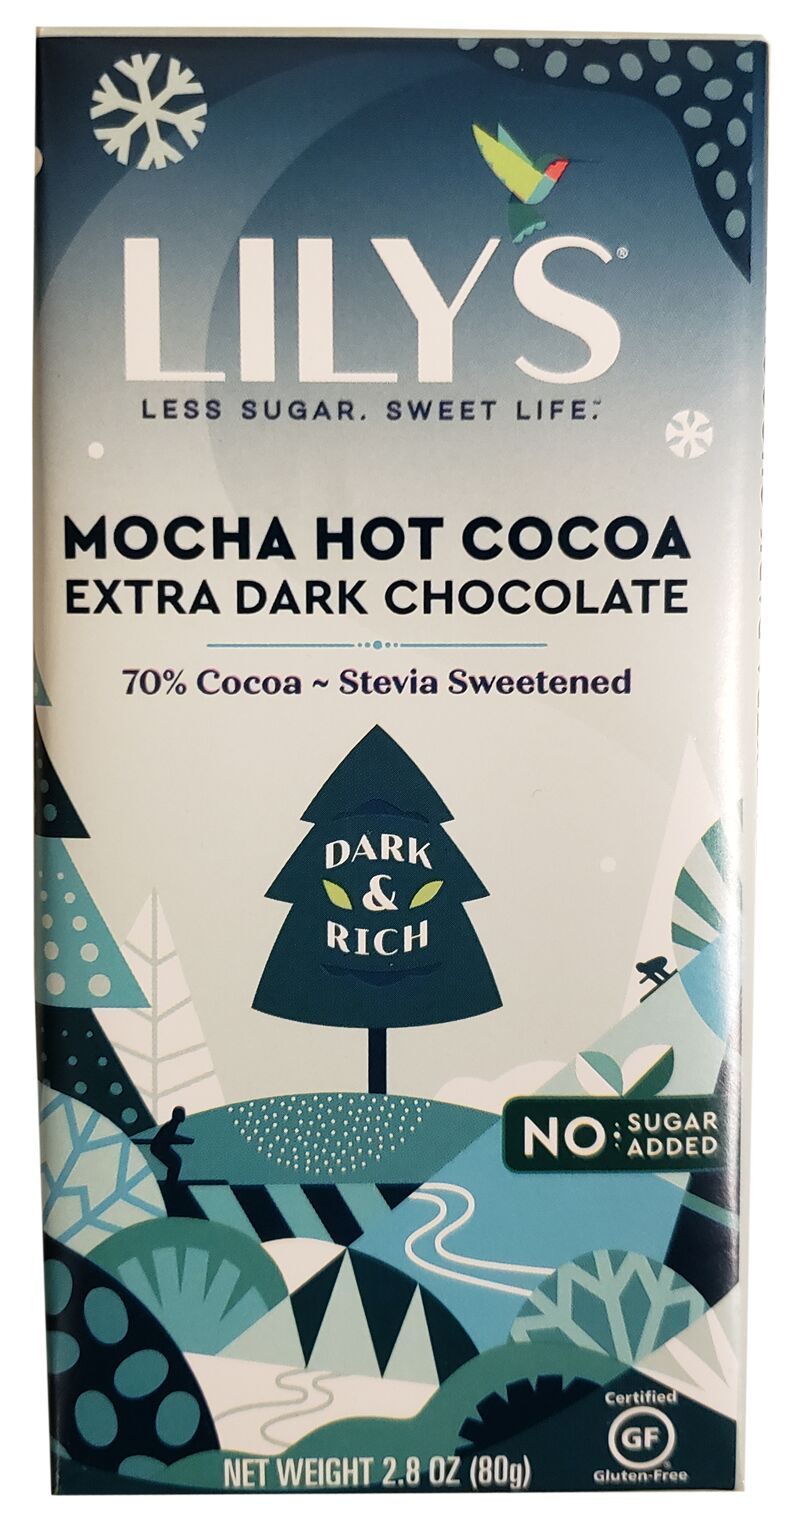 #Flavor_Mocha Hot Cocoa #Size_12 bars